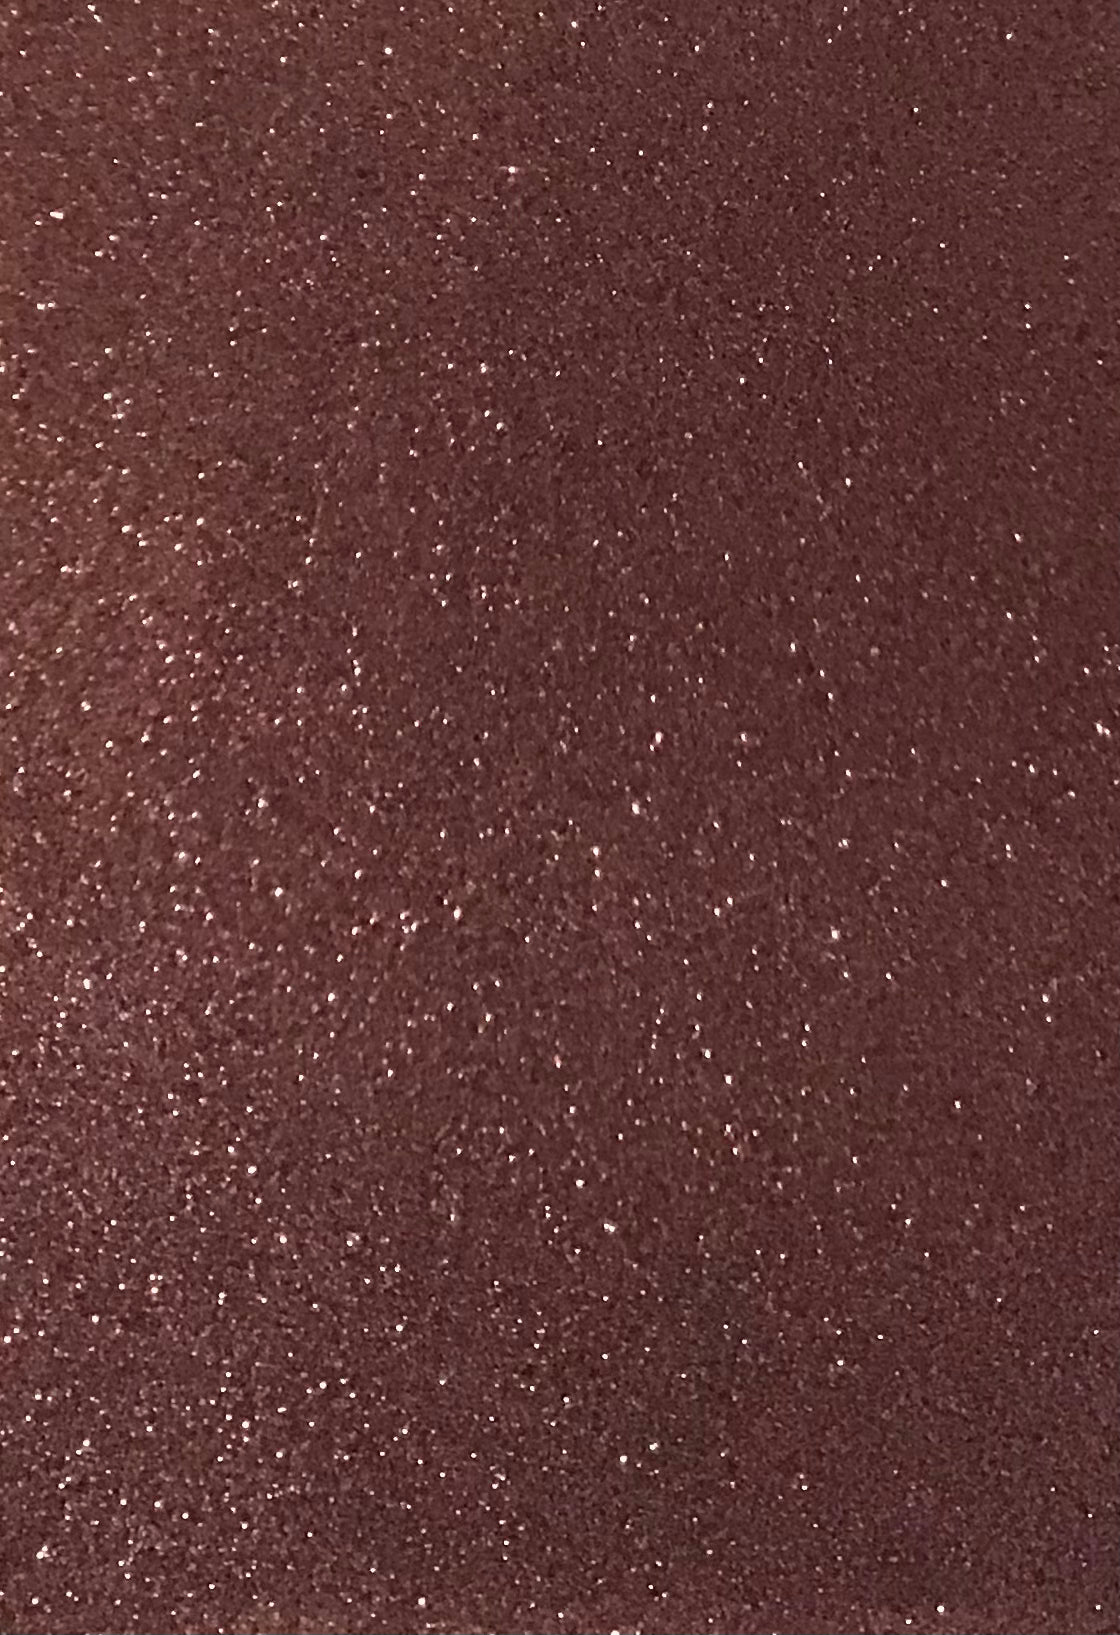 Craft Foam Glitter Bronze - Size Approx 30 x 20cm - Thickness Approx 1.5mm